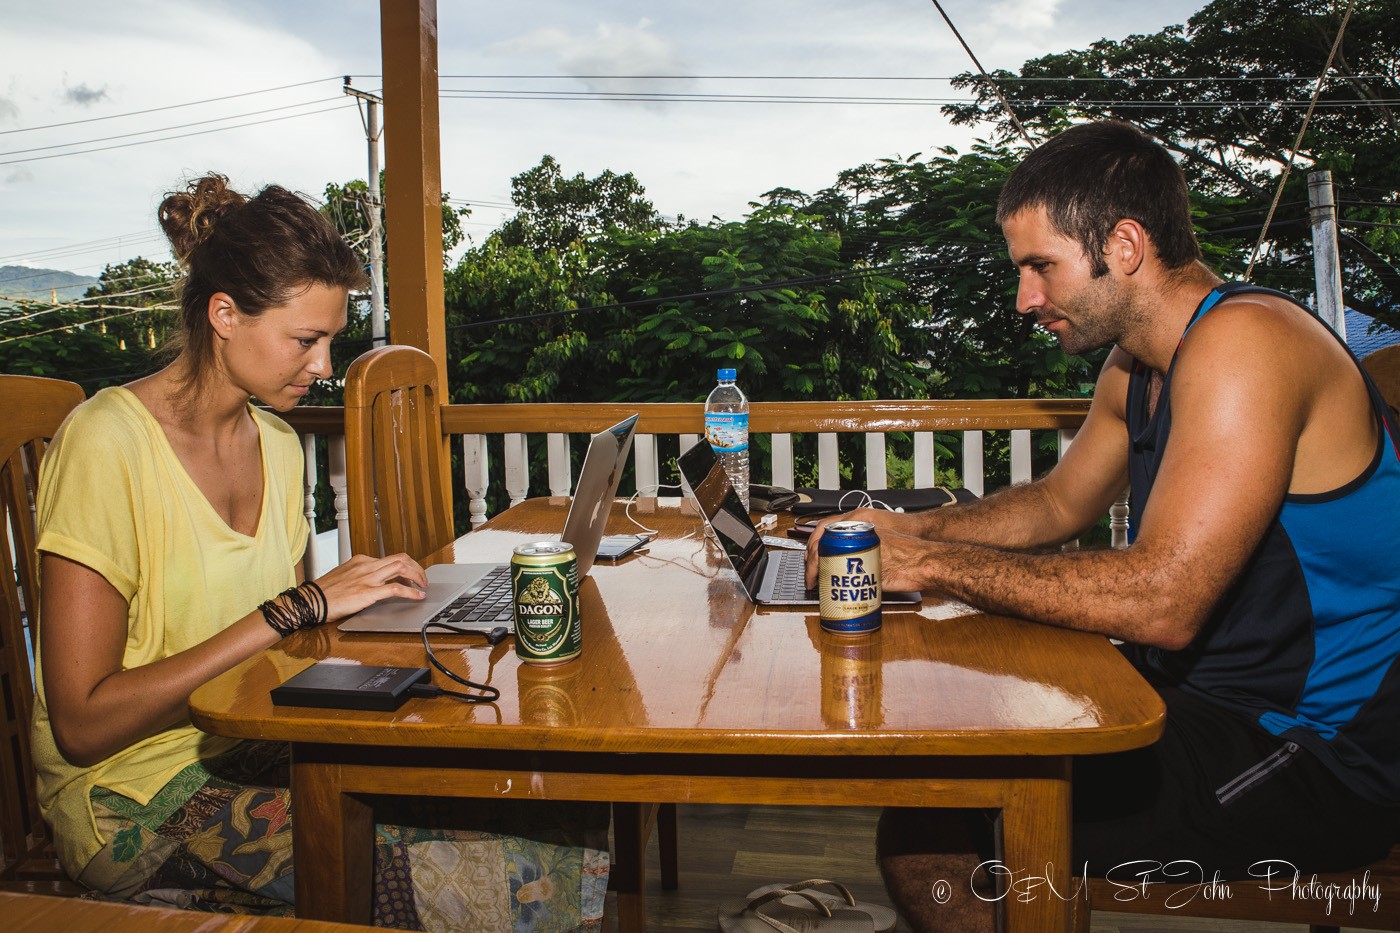 Max & Oksana working on laptops in Inle Lake, Myanmar.